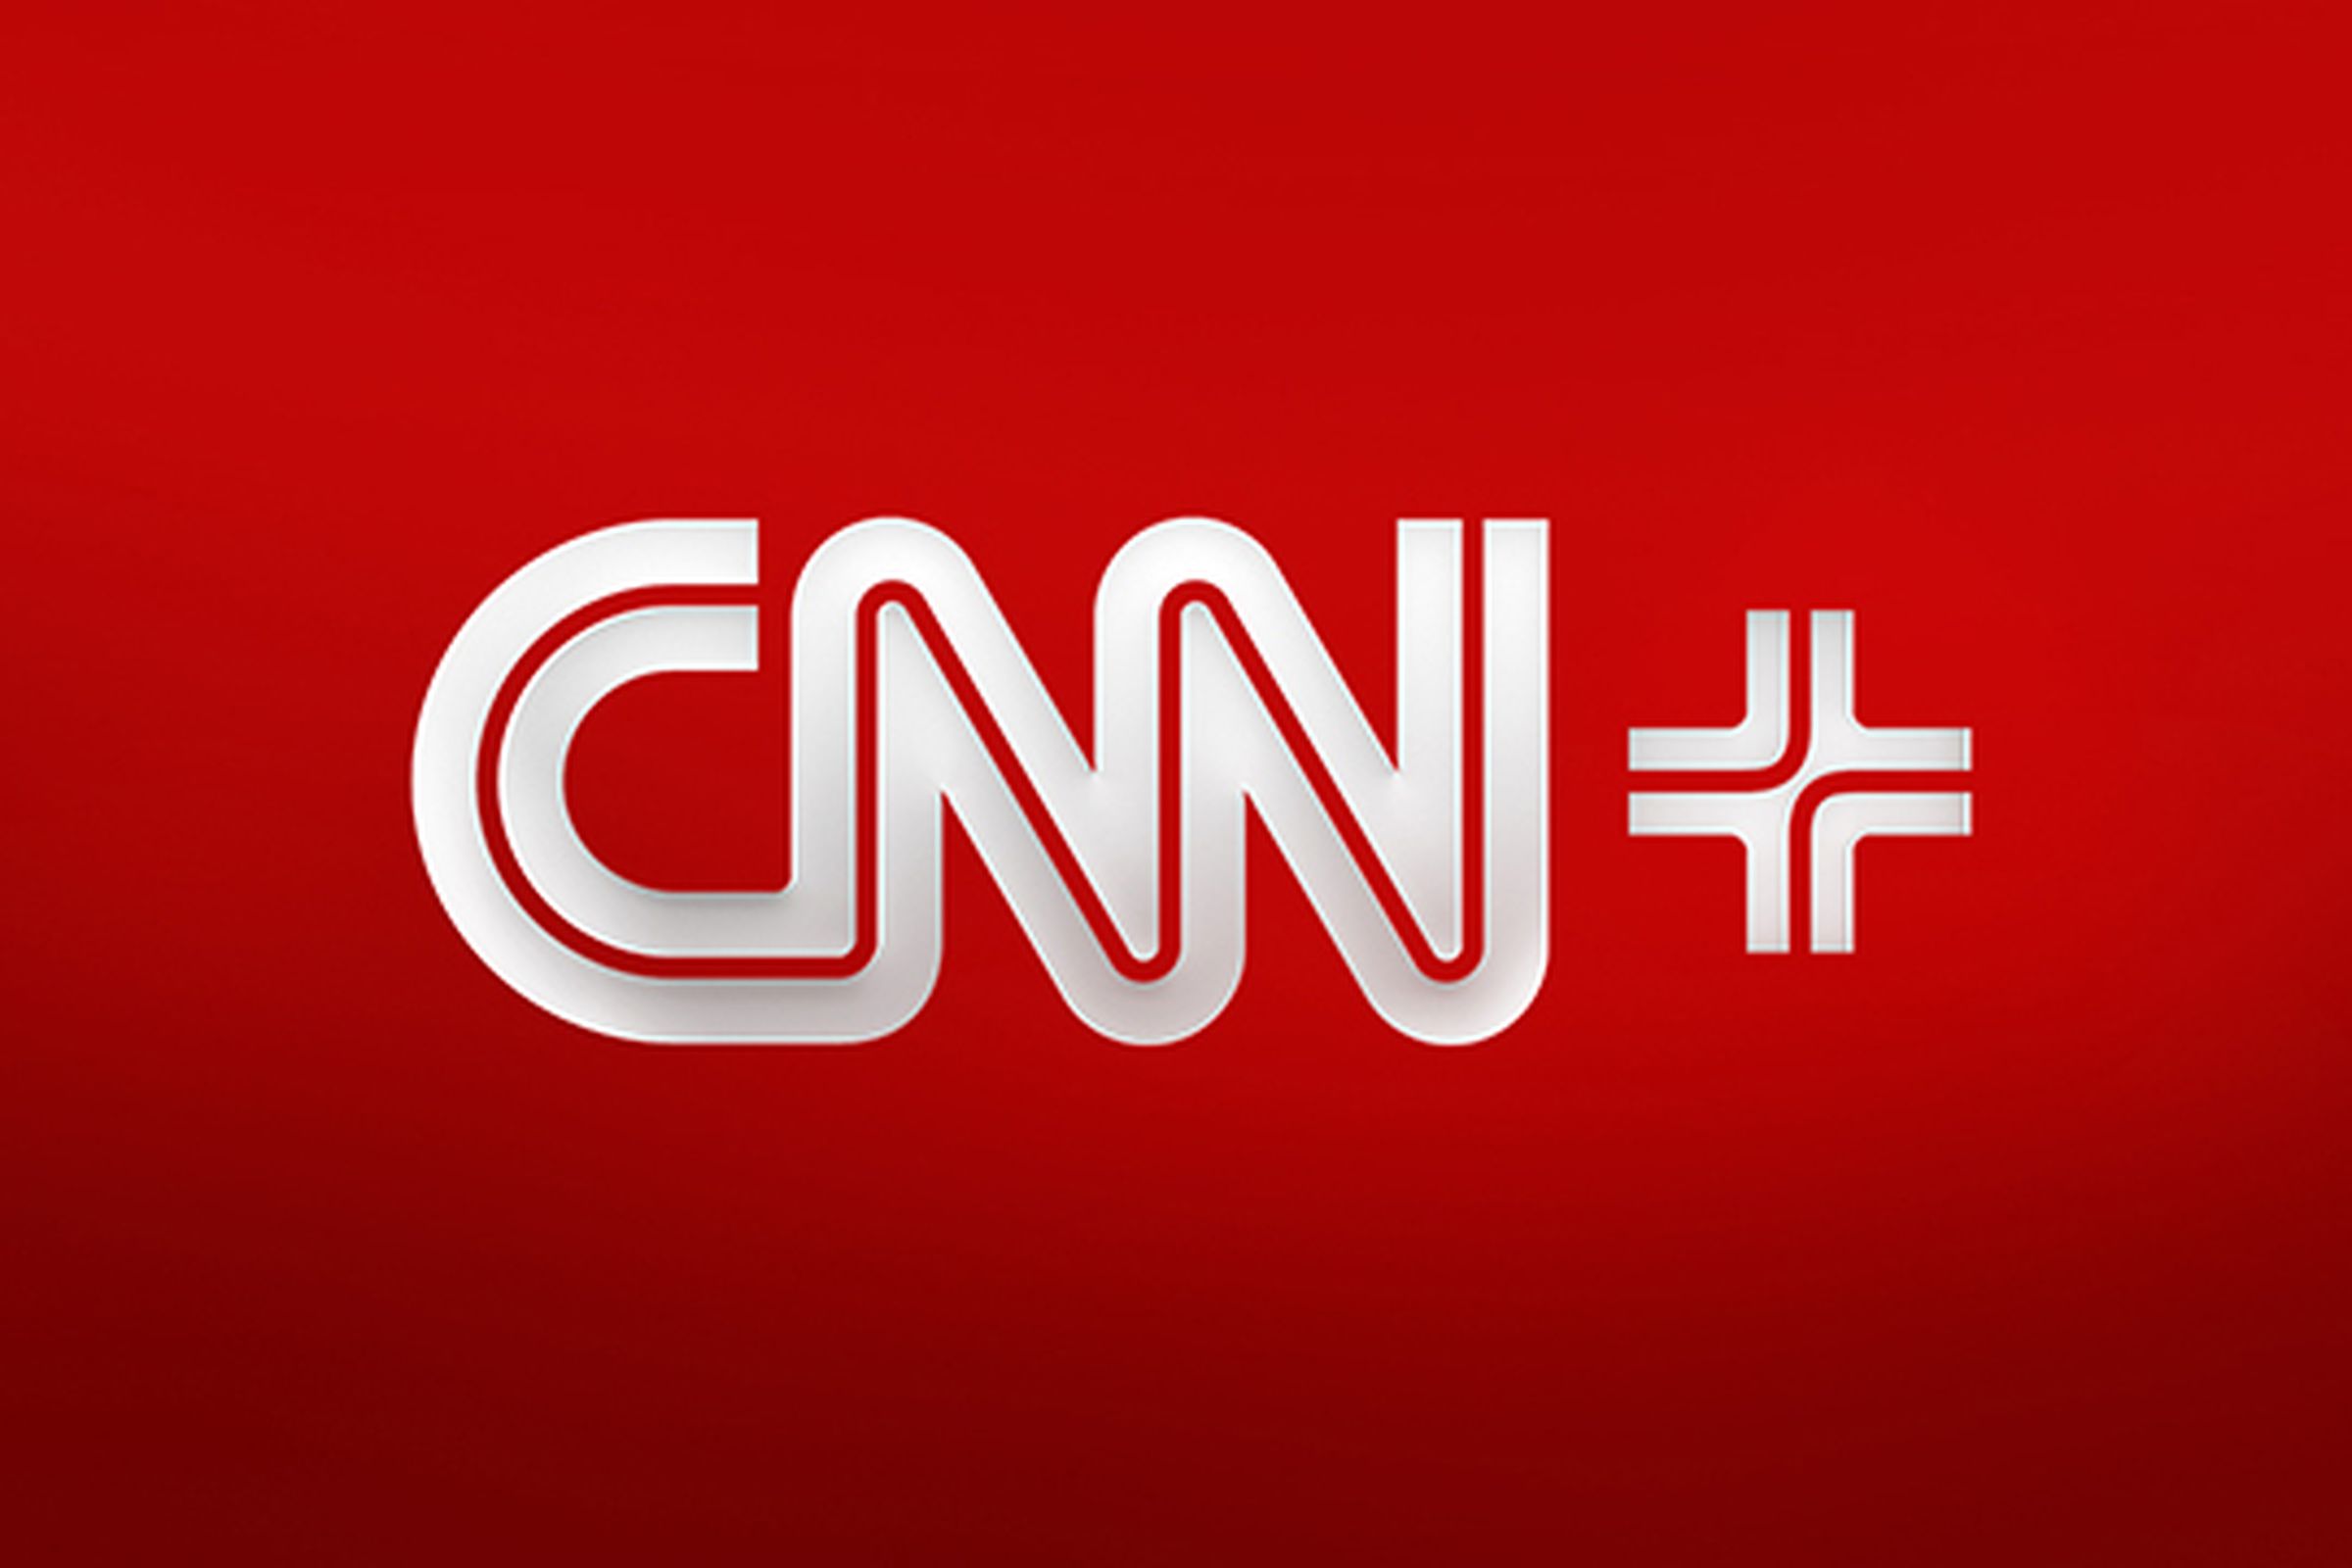 CNN Plus will debut March 29th